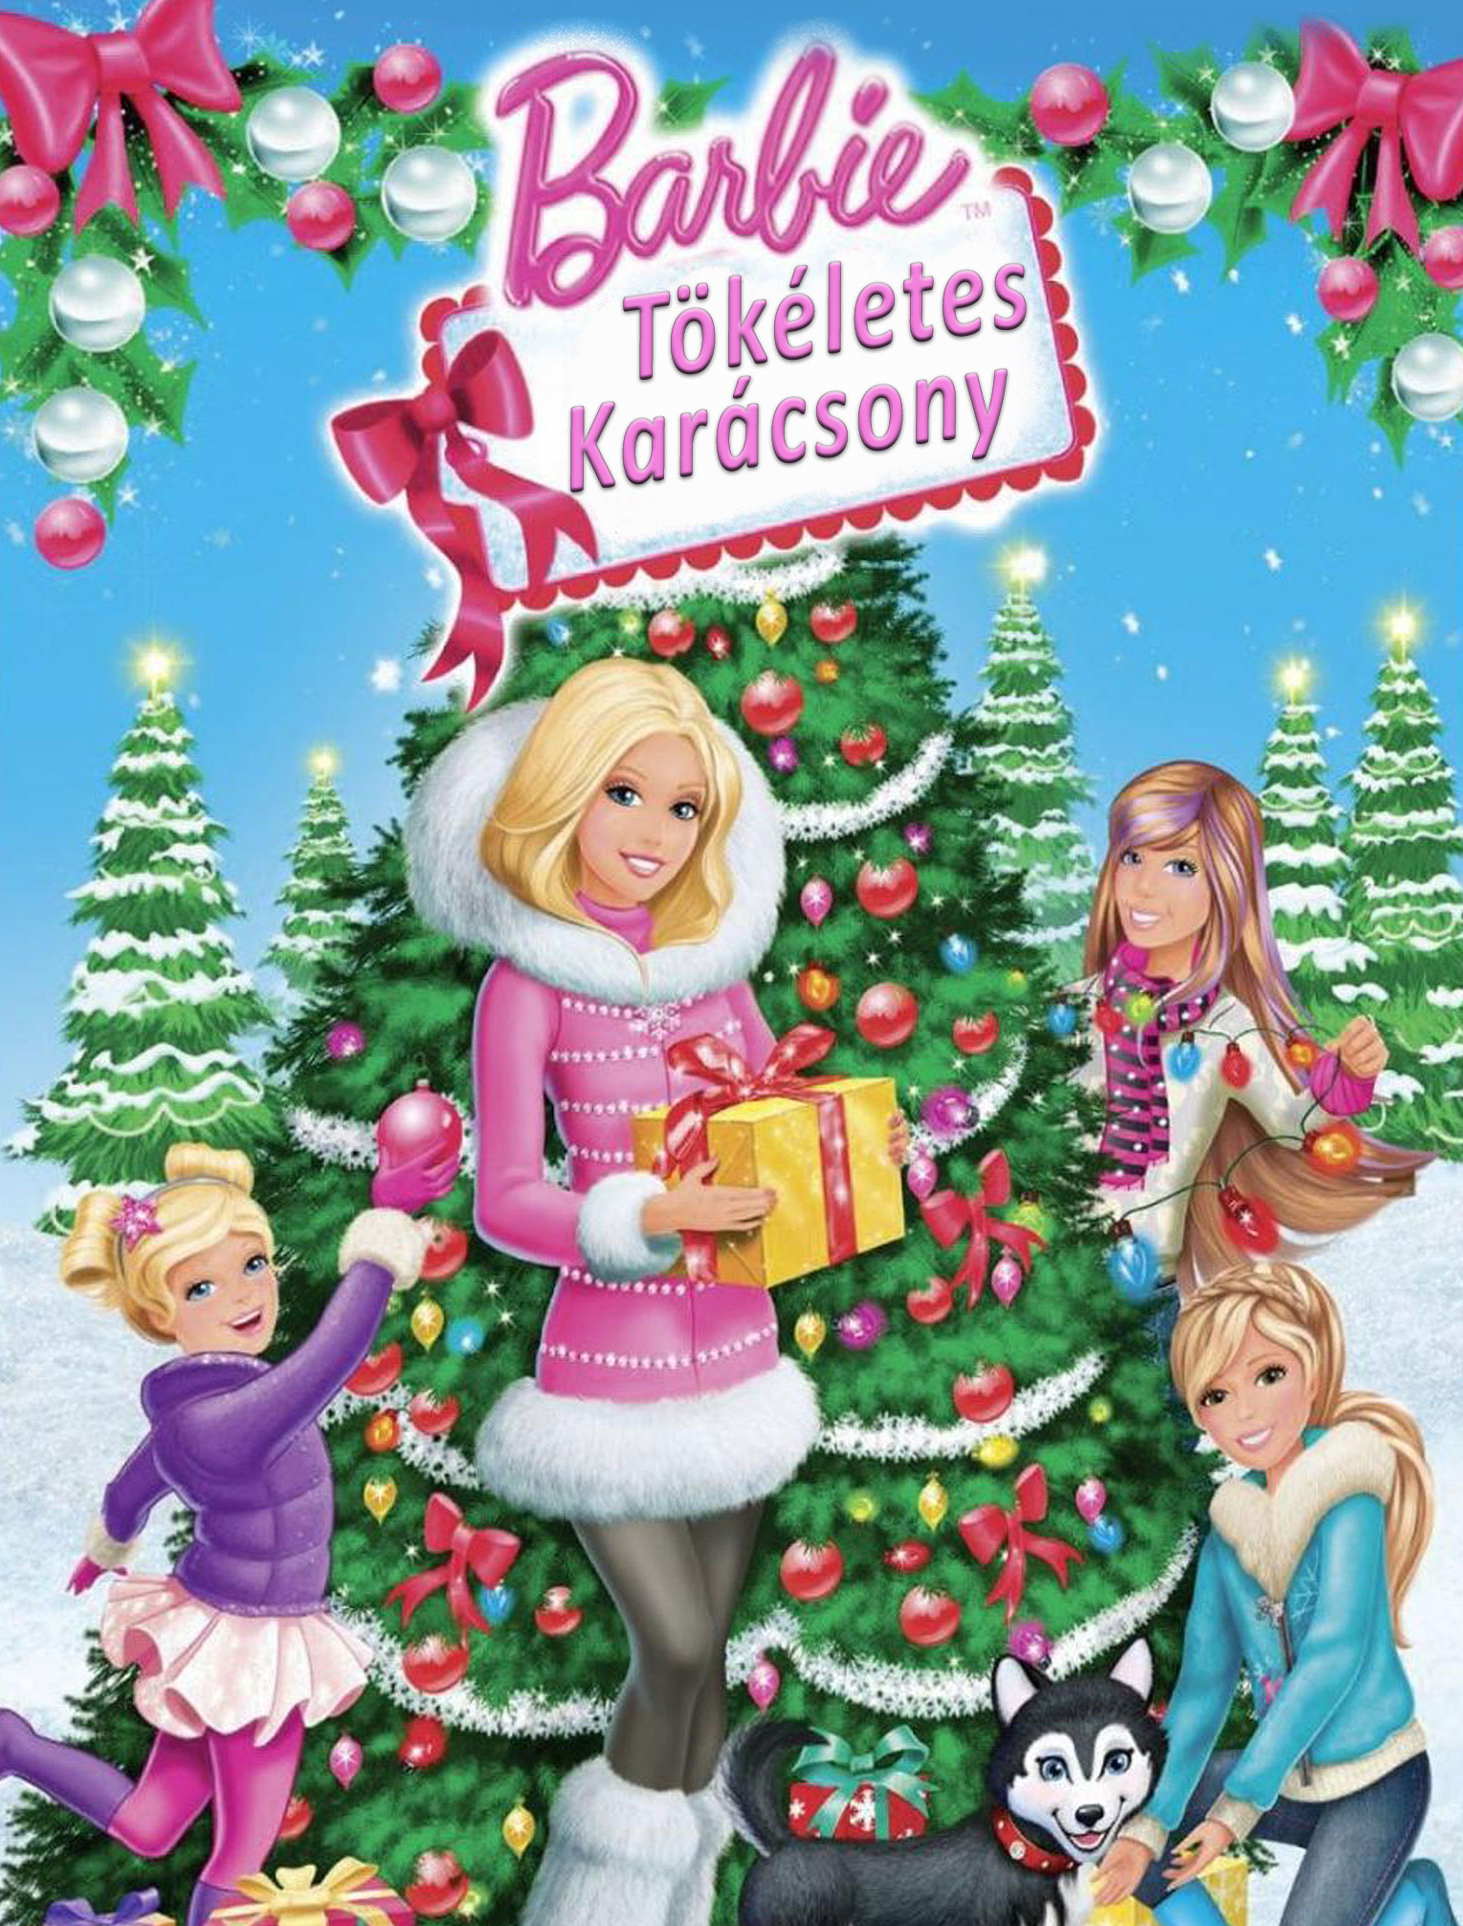 karácsonyi krónikák 2014 edition